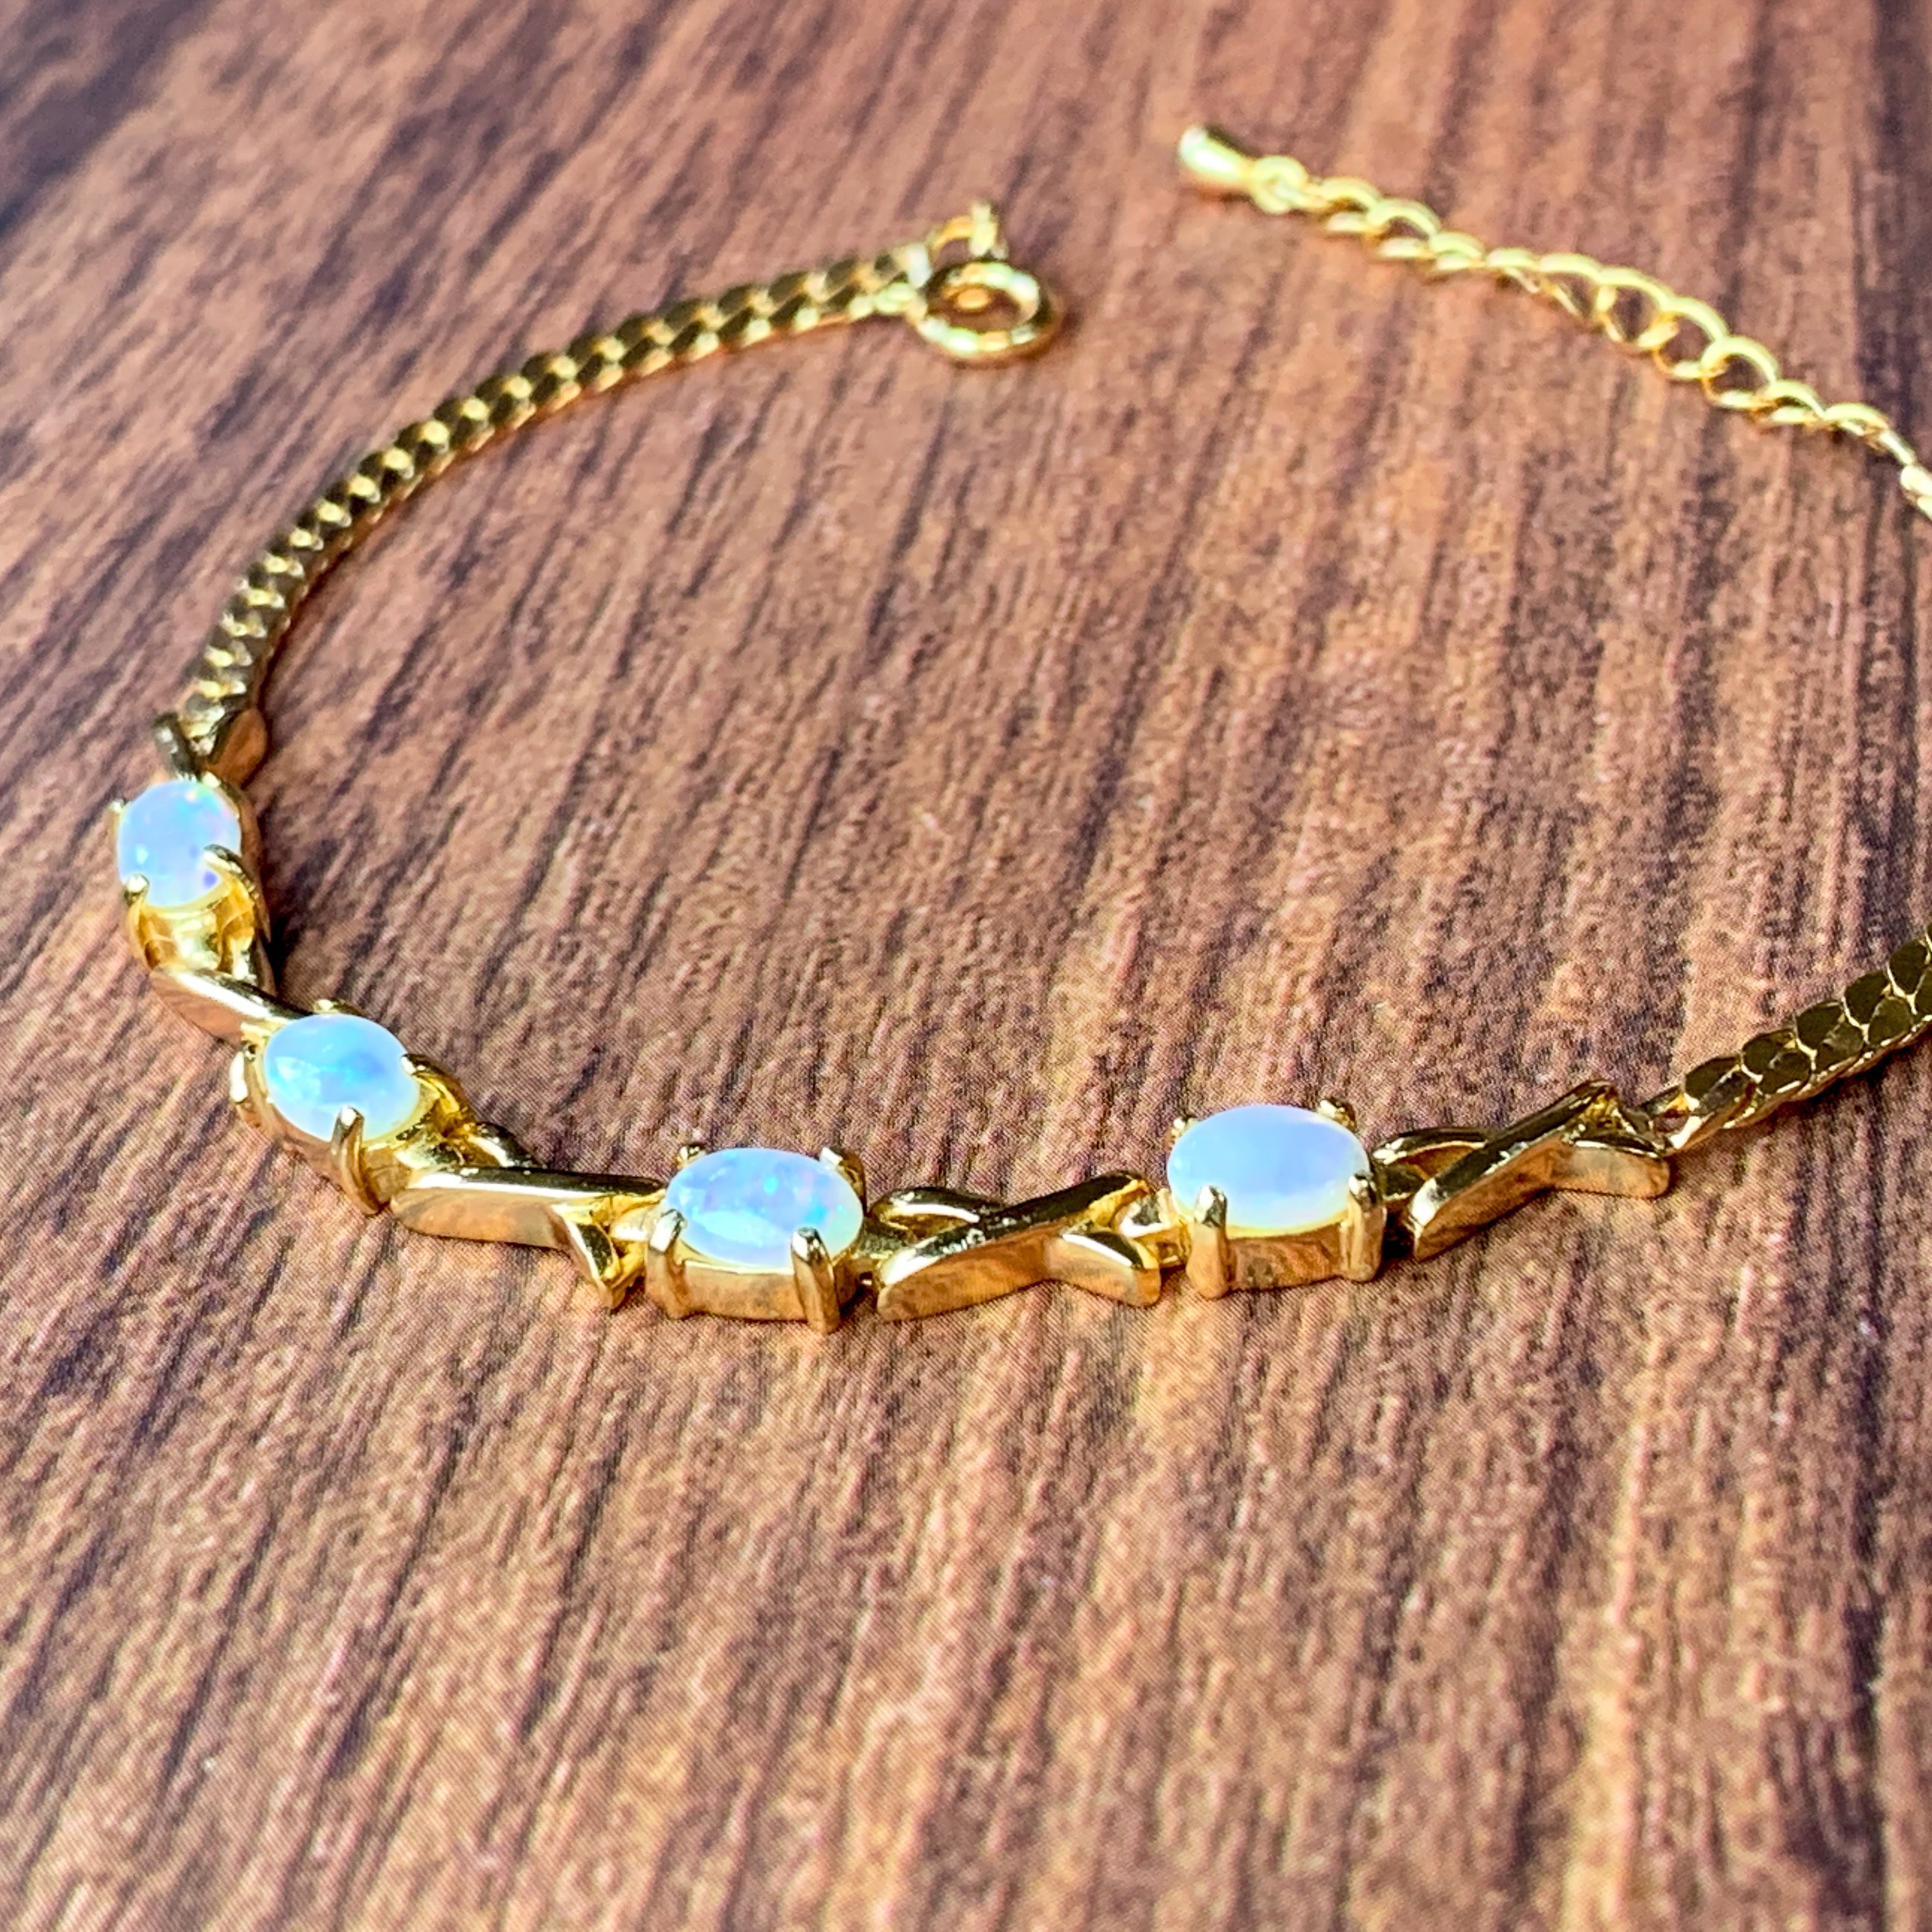 Gold plated silver 6x4mm White Opal bracelet cross design - Masterpiece Jewellery Opal & Gems Sydney Australia | Online Shop